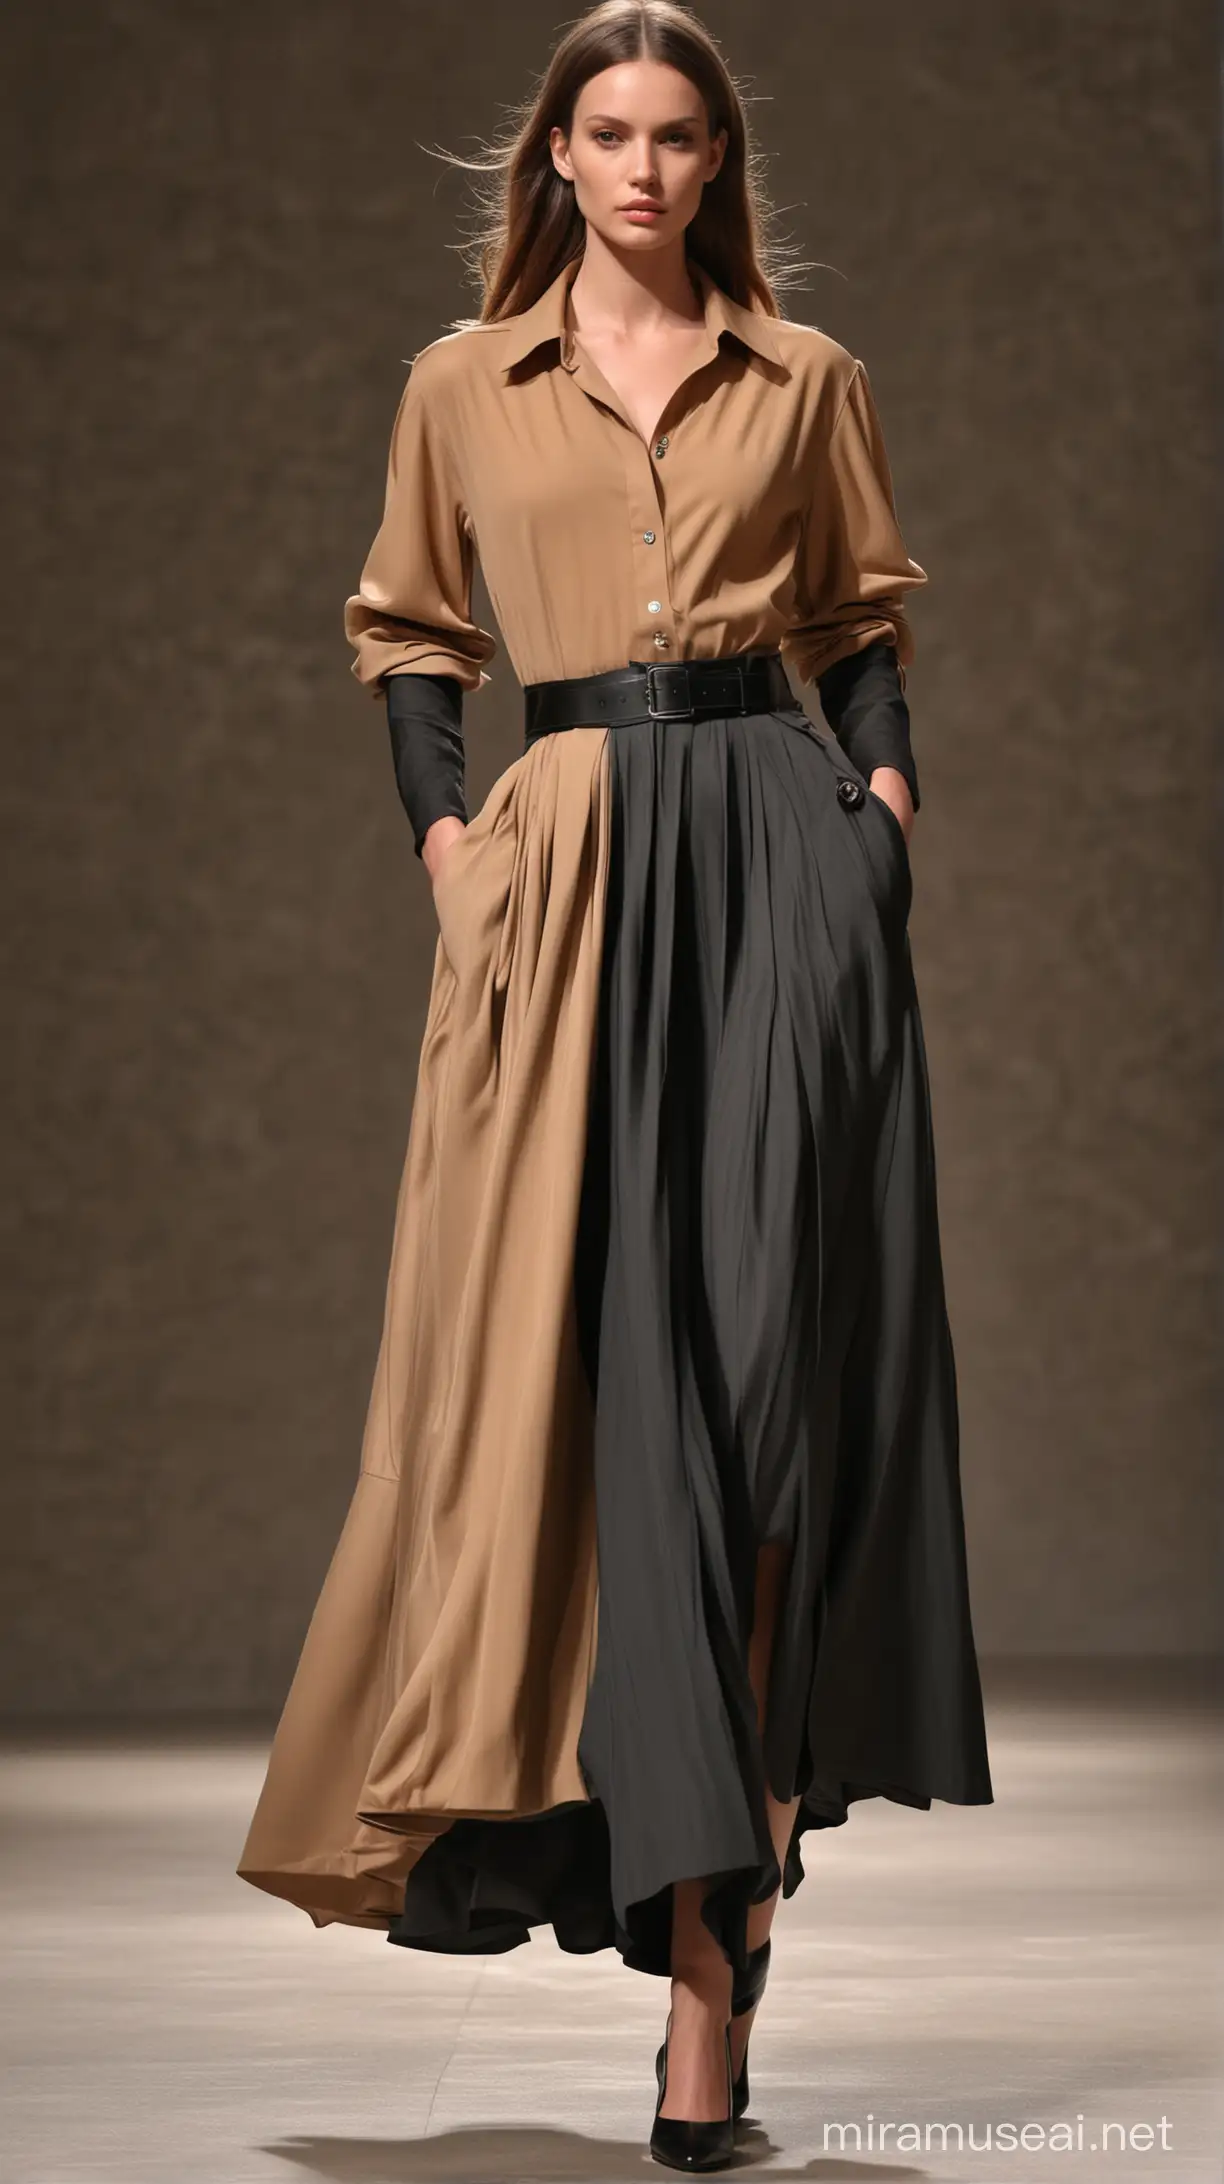 Elegant Runway Motion Montelago Brand Supermodel in Flowy Camel and Black Charcoal Dress